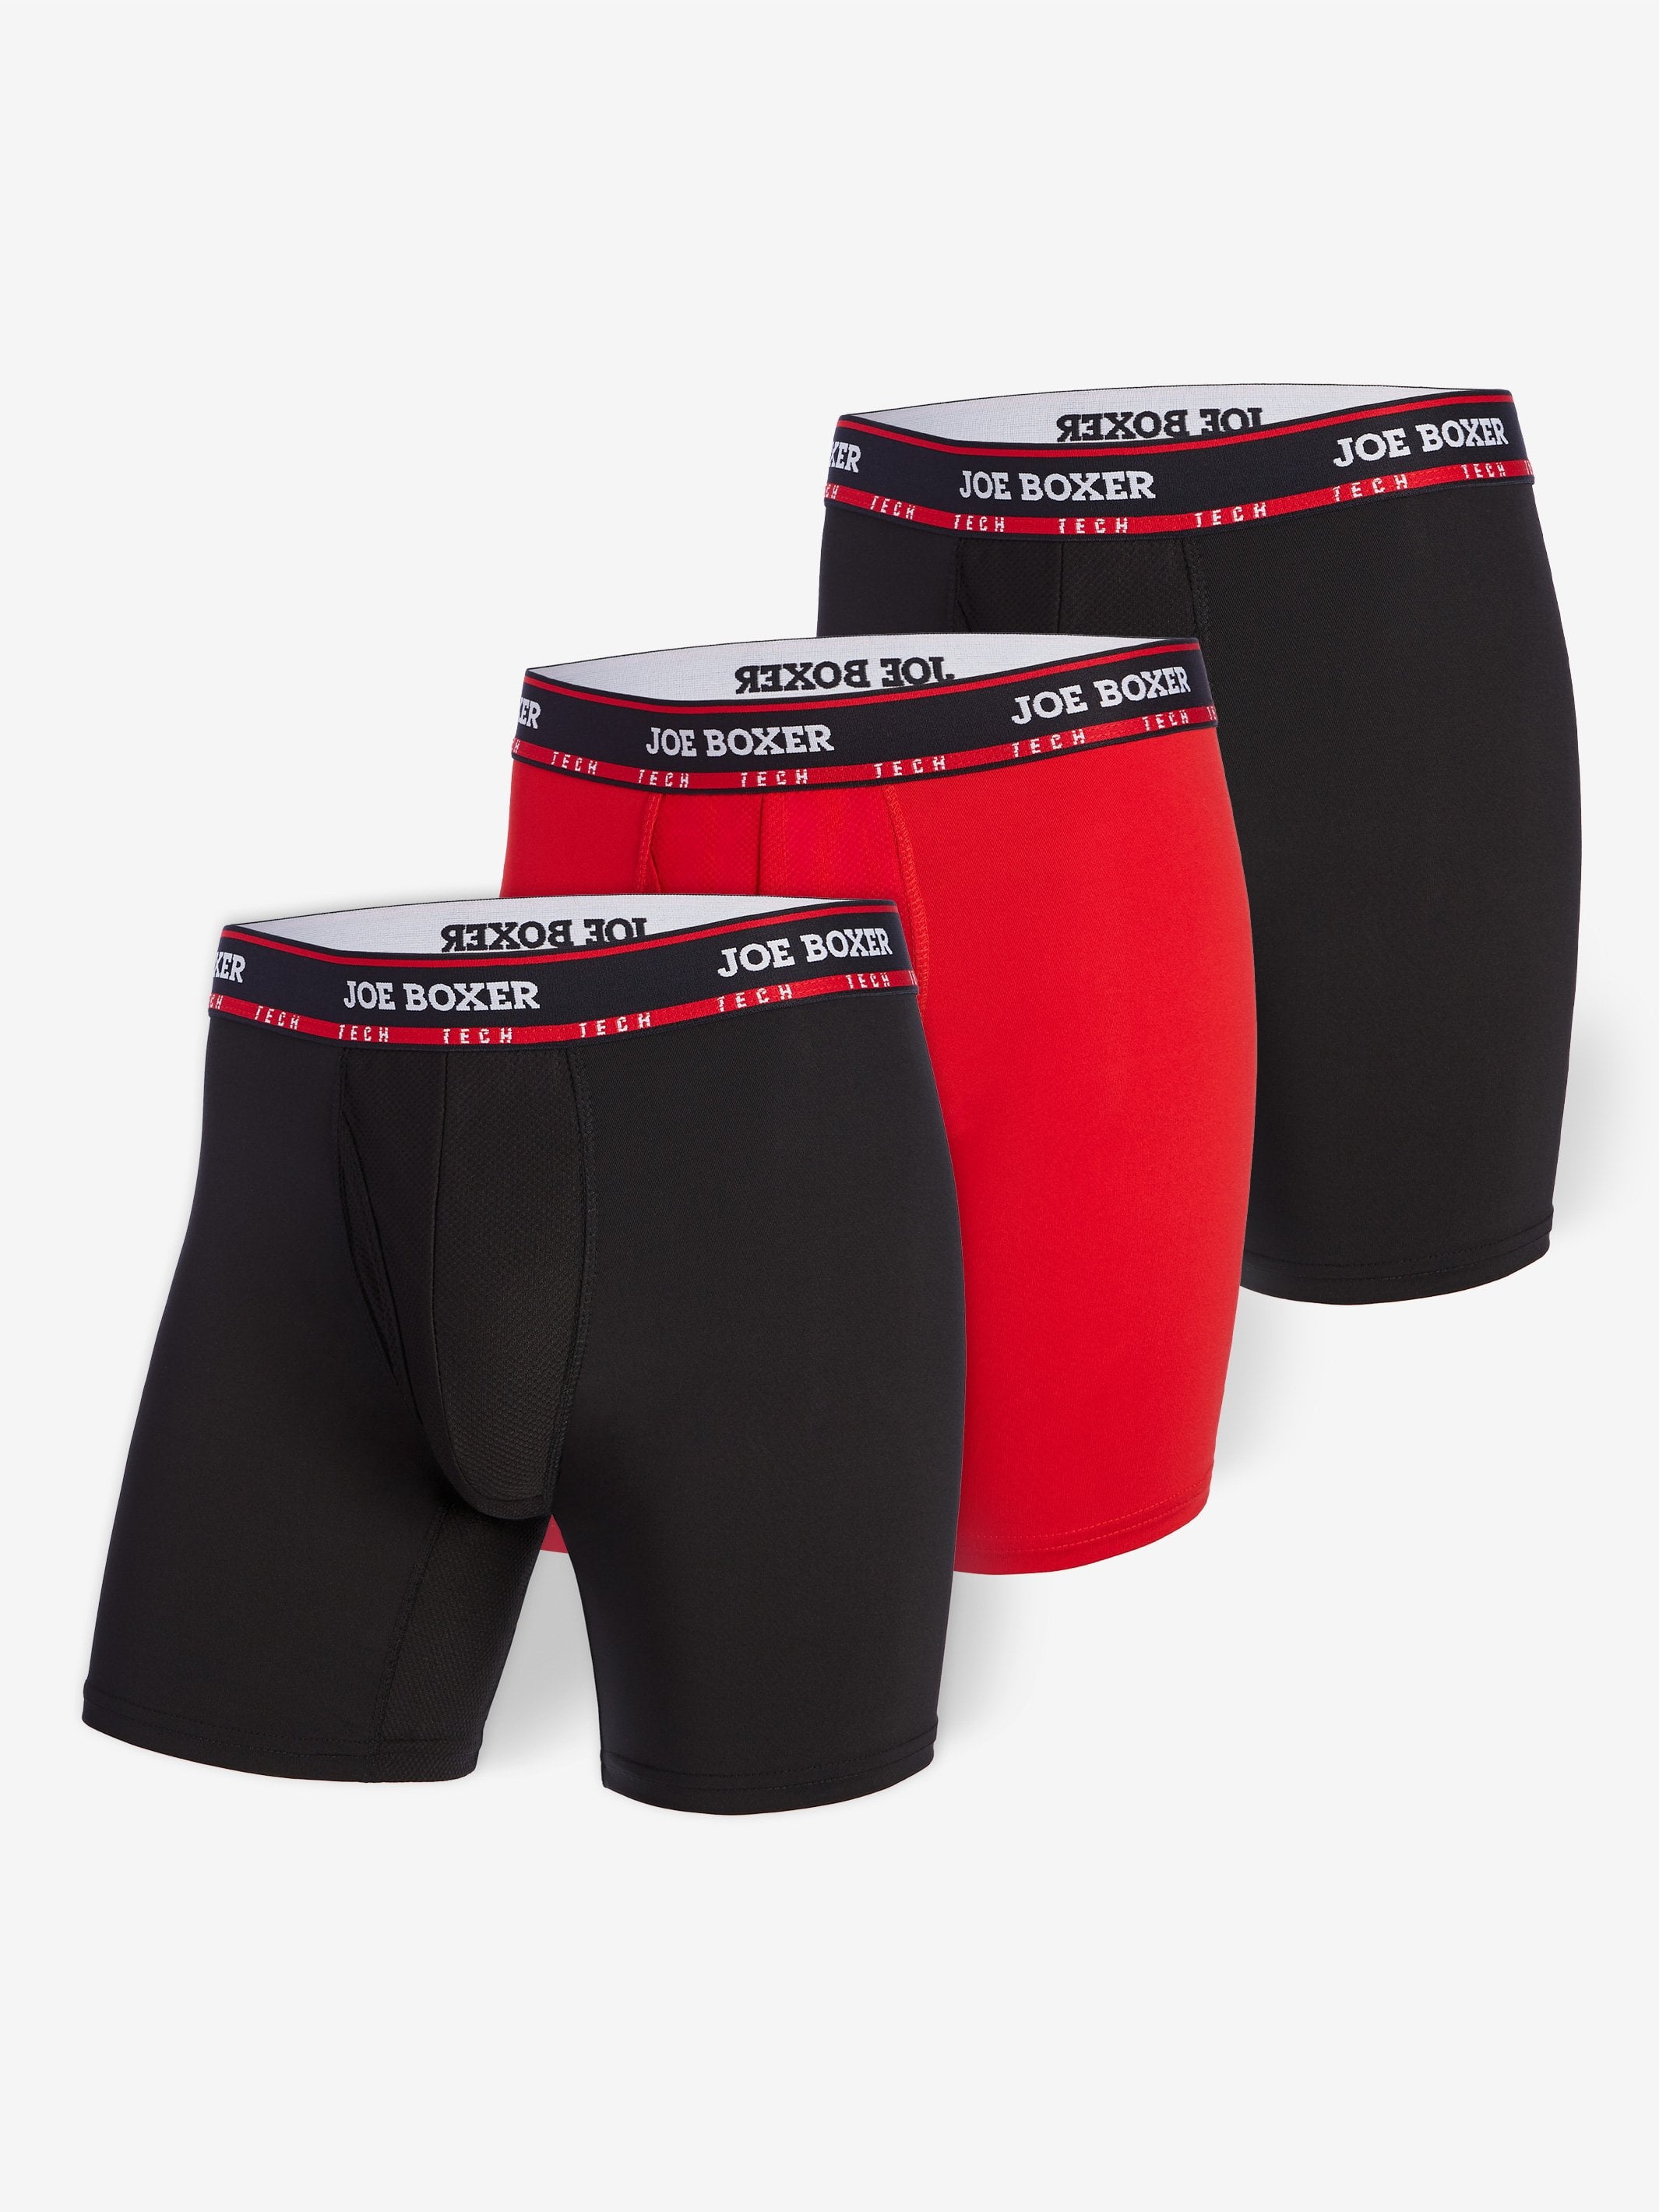 Mens Underwear Multipacks, Shop Joe Boxer Canada Now